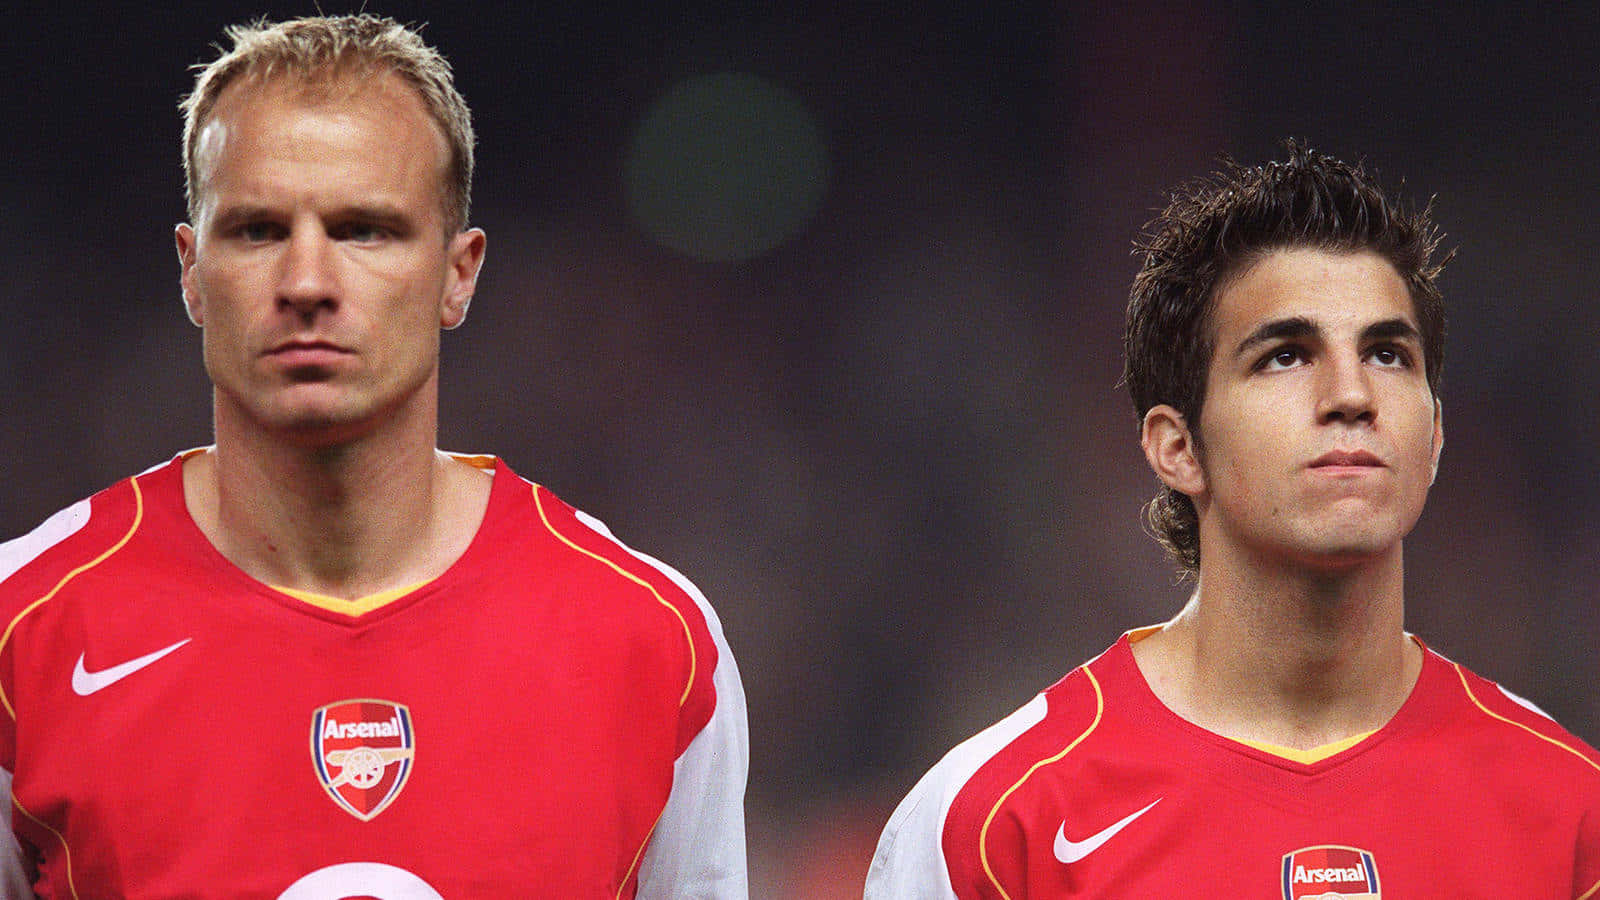 Dennisbergkamp Y Cesc Fábregas Del Arsenal Fc. Fondo de pantalla